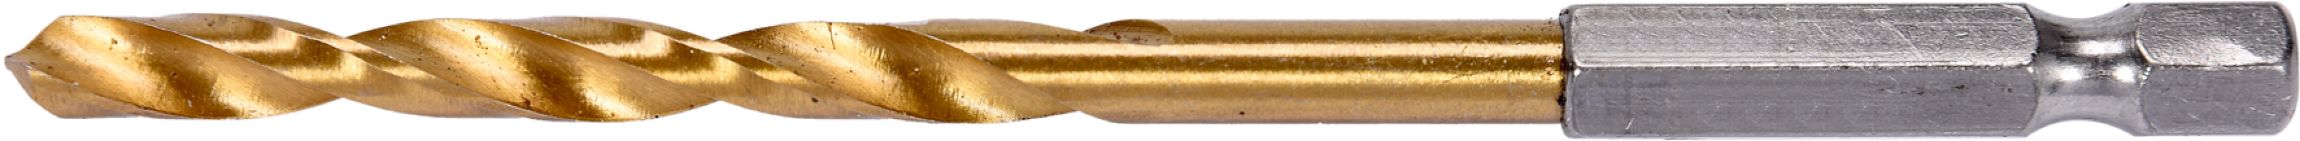 Vrtk do kovu HSS-titan 1,5mm se estihranou stopkou 1/4" Yato YT-44750